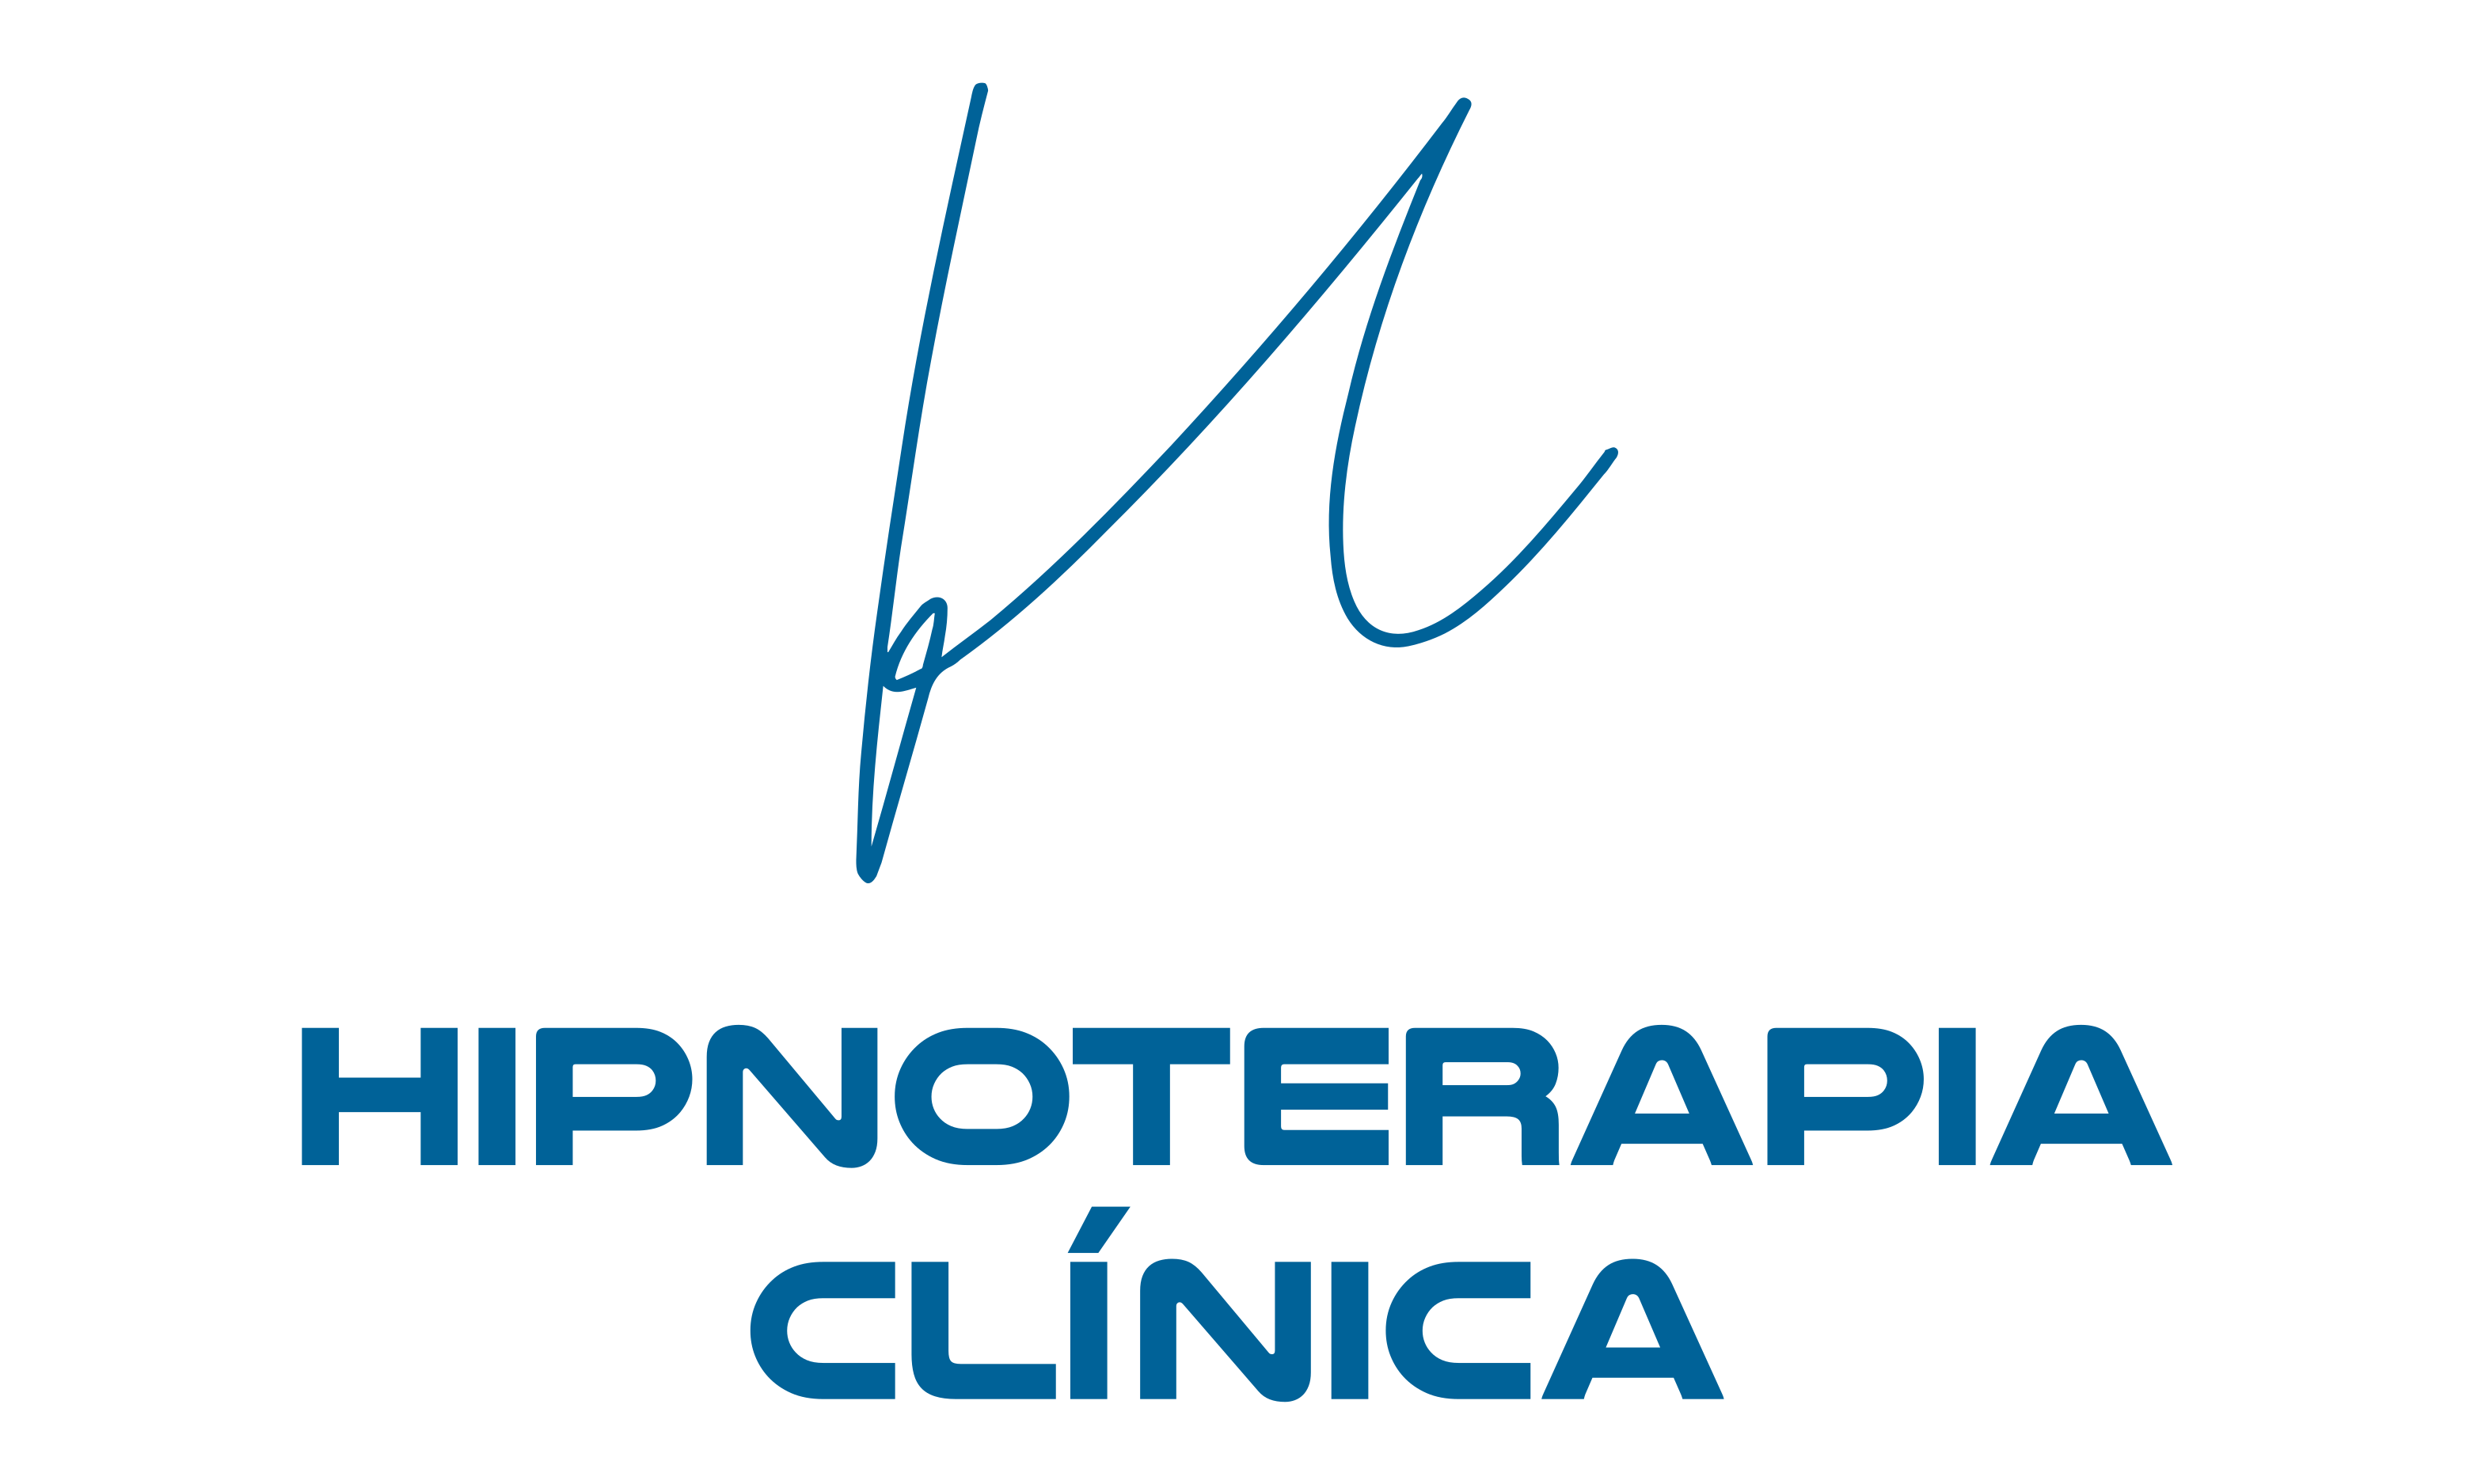 Hipnoterapia Clínica - Terapia por hipnose